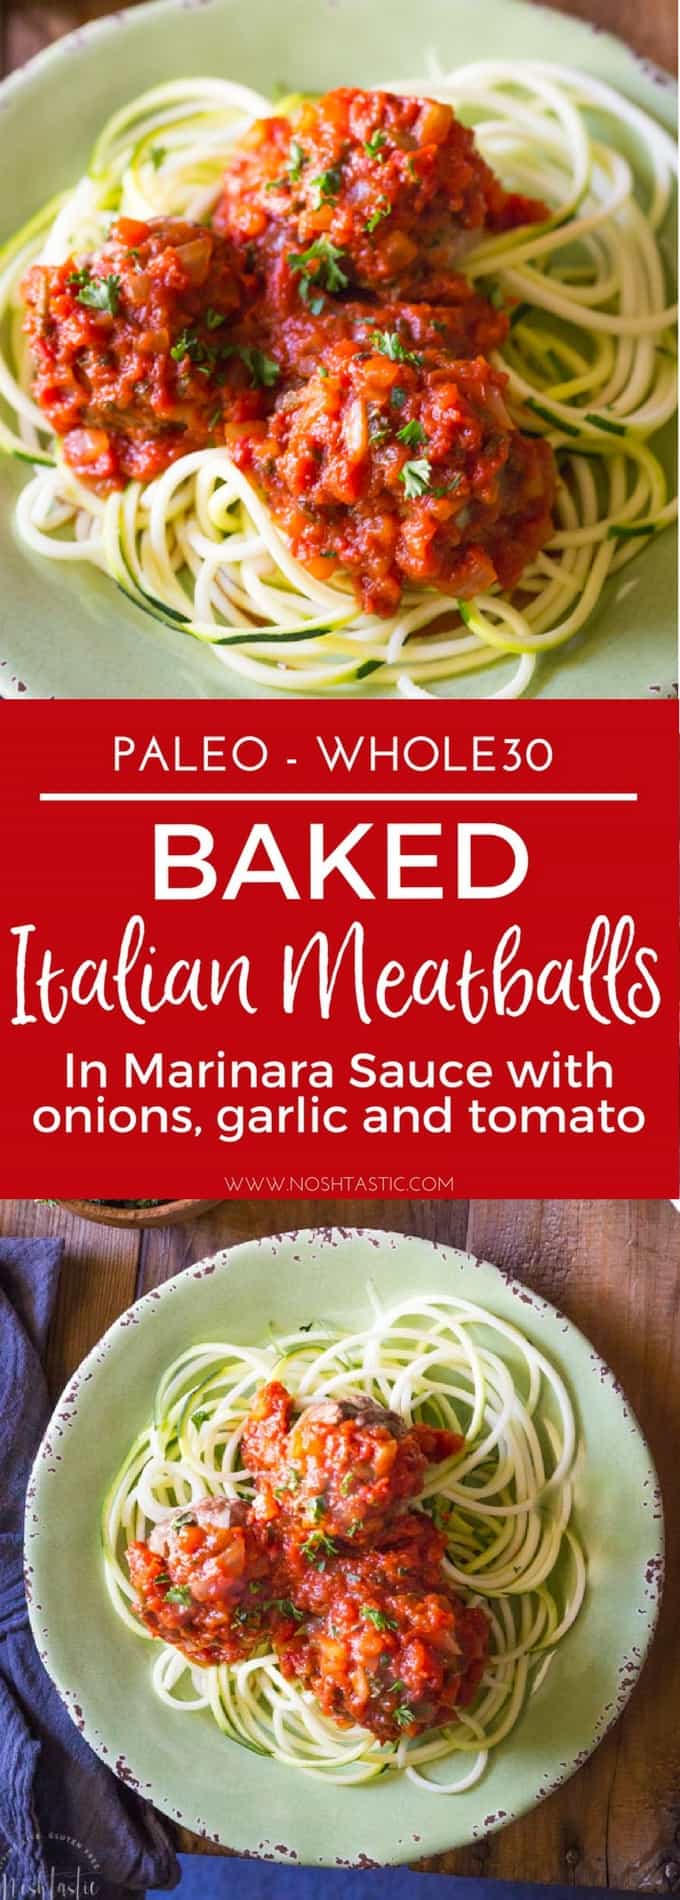 Best Ever Paleo Italian Meatballs in Marinara Sauce!